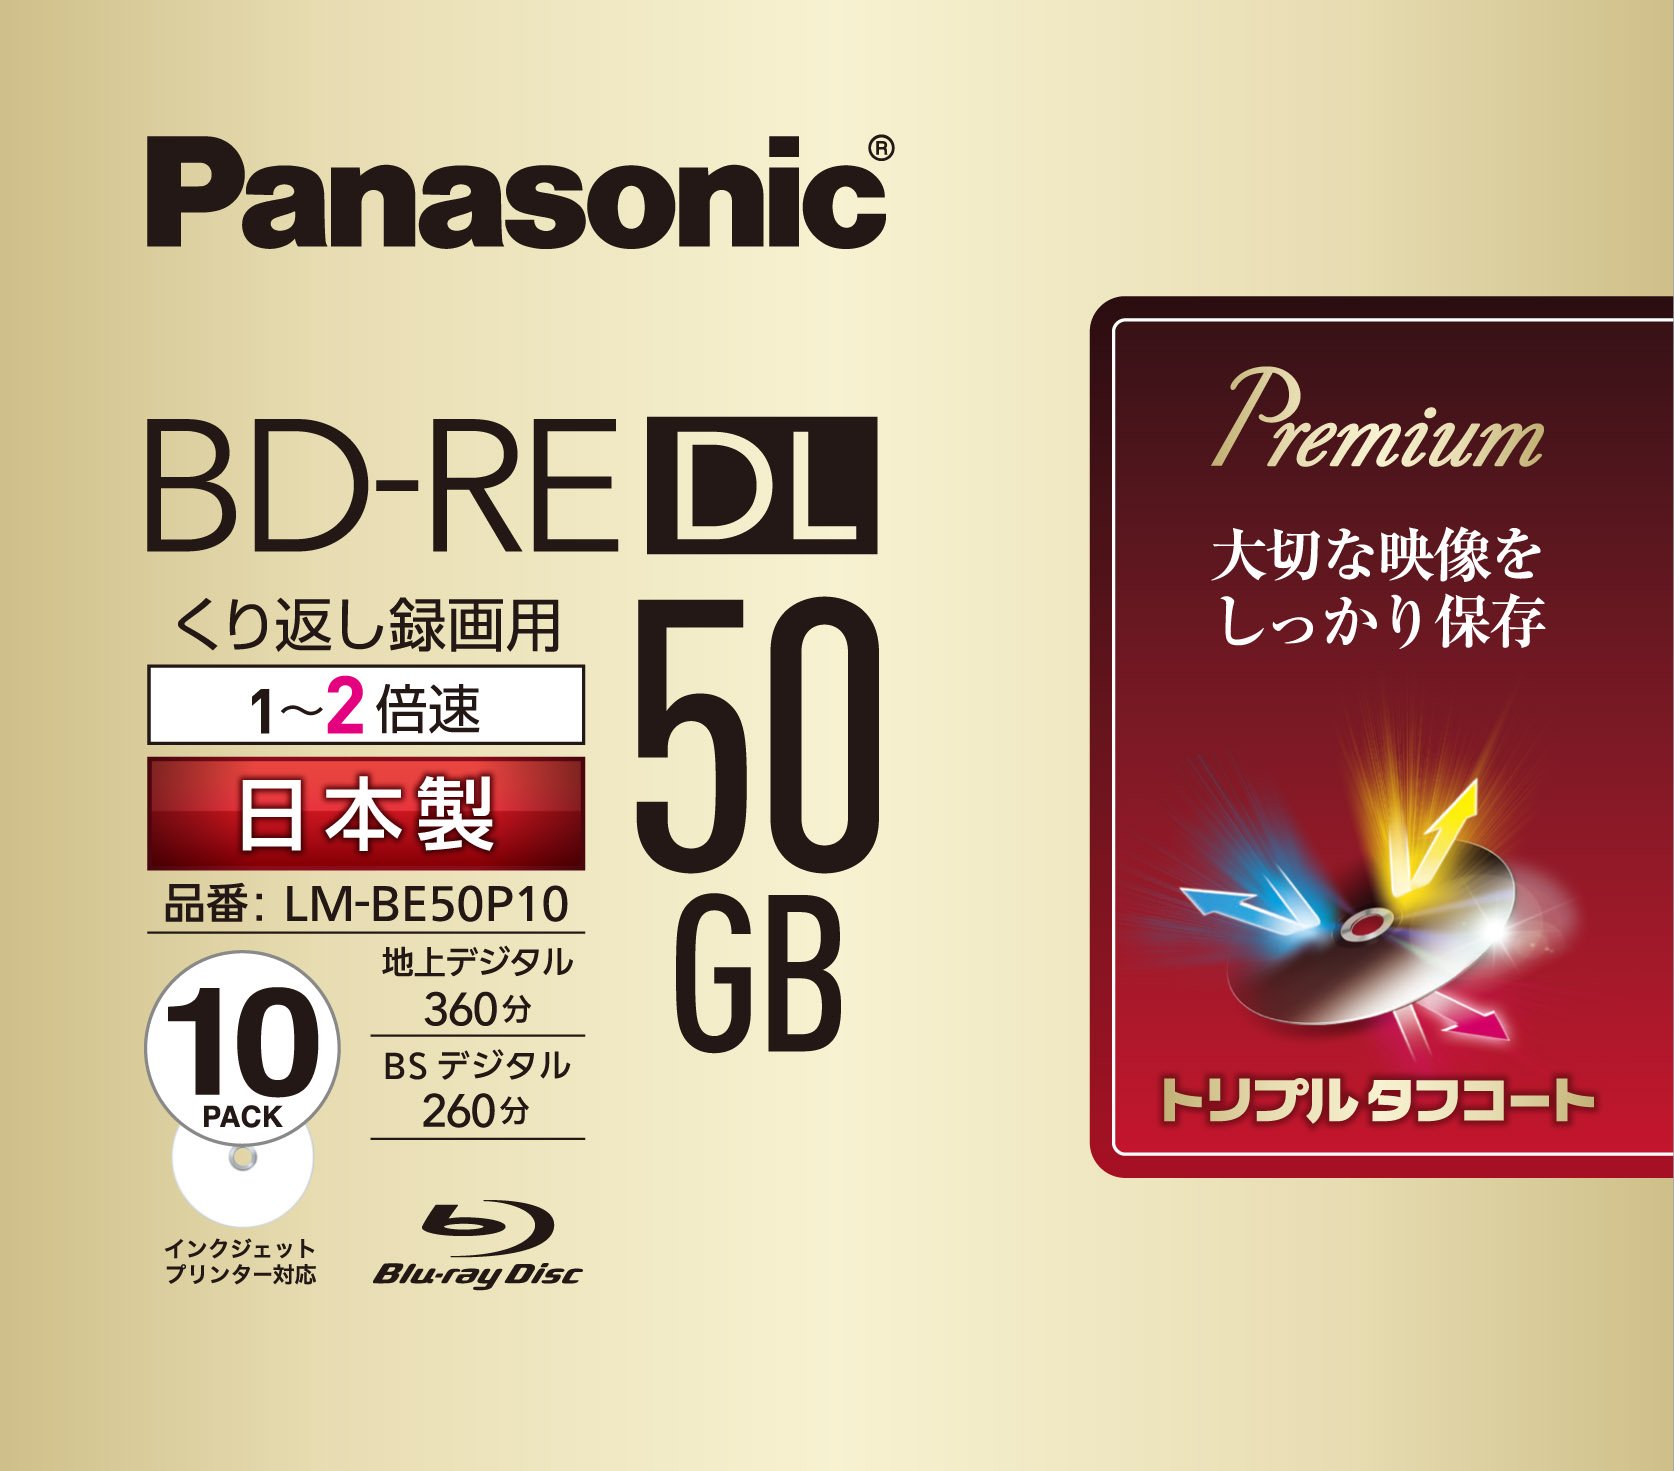 PANASONIC Blu-ray Disc 10 Pack - BD-RE DL 50GB 2X Speed Rewritable Ink-Jet Printable LM-BE50P10